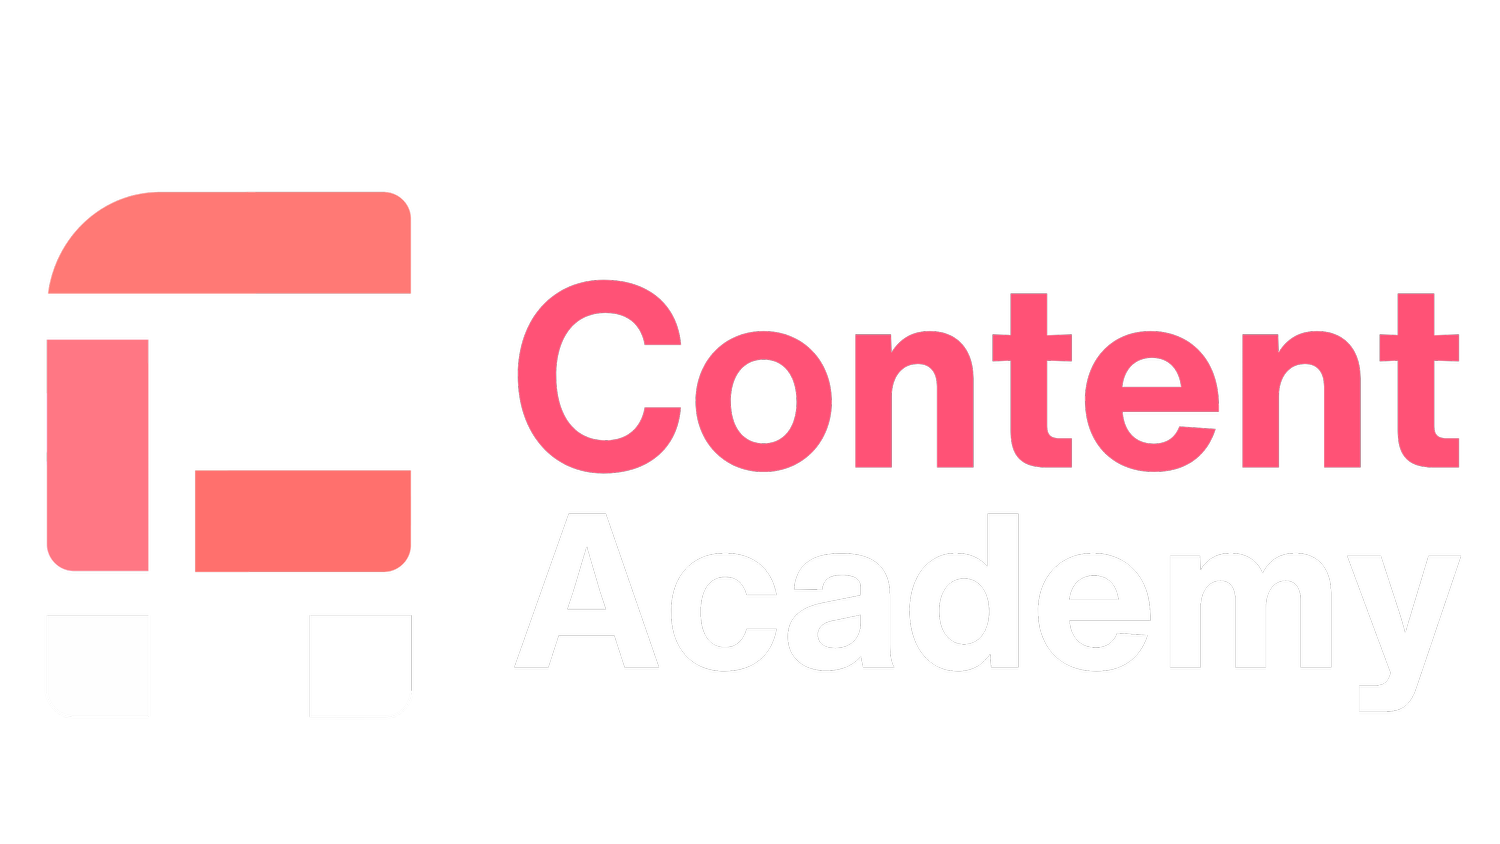 The ContentPreneur Academy